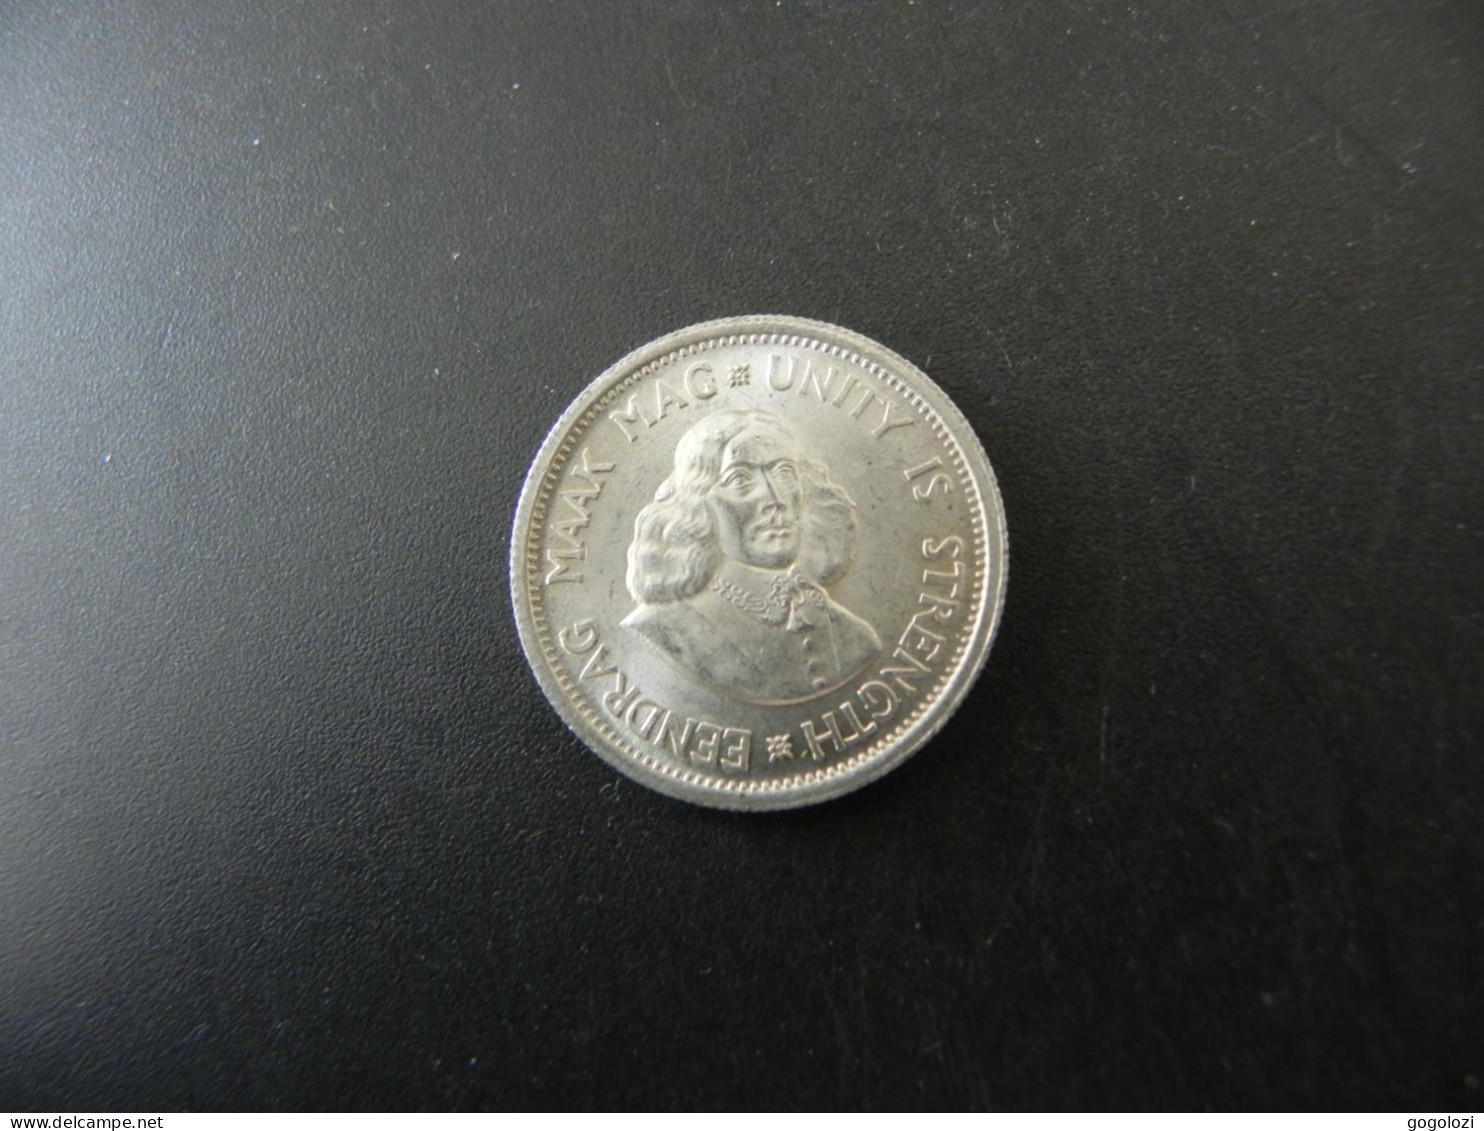 South Africa 10 Cents 1964 Silver - Südafrika